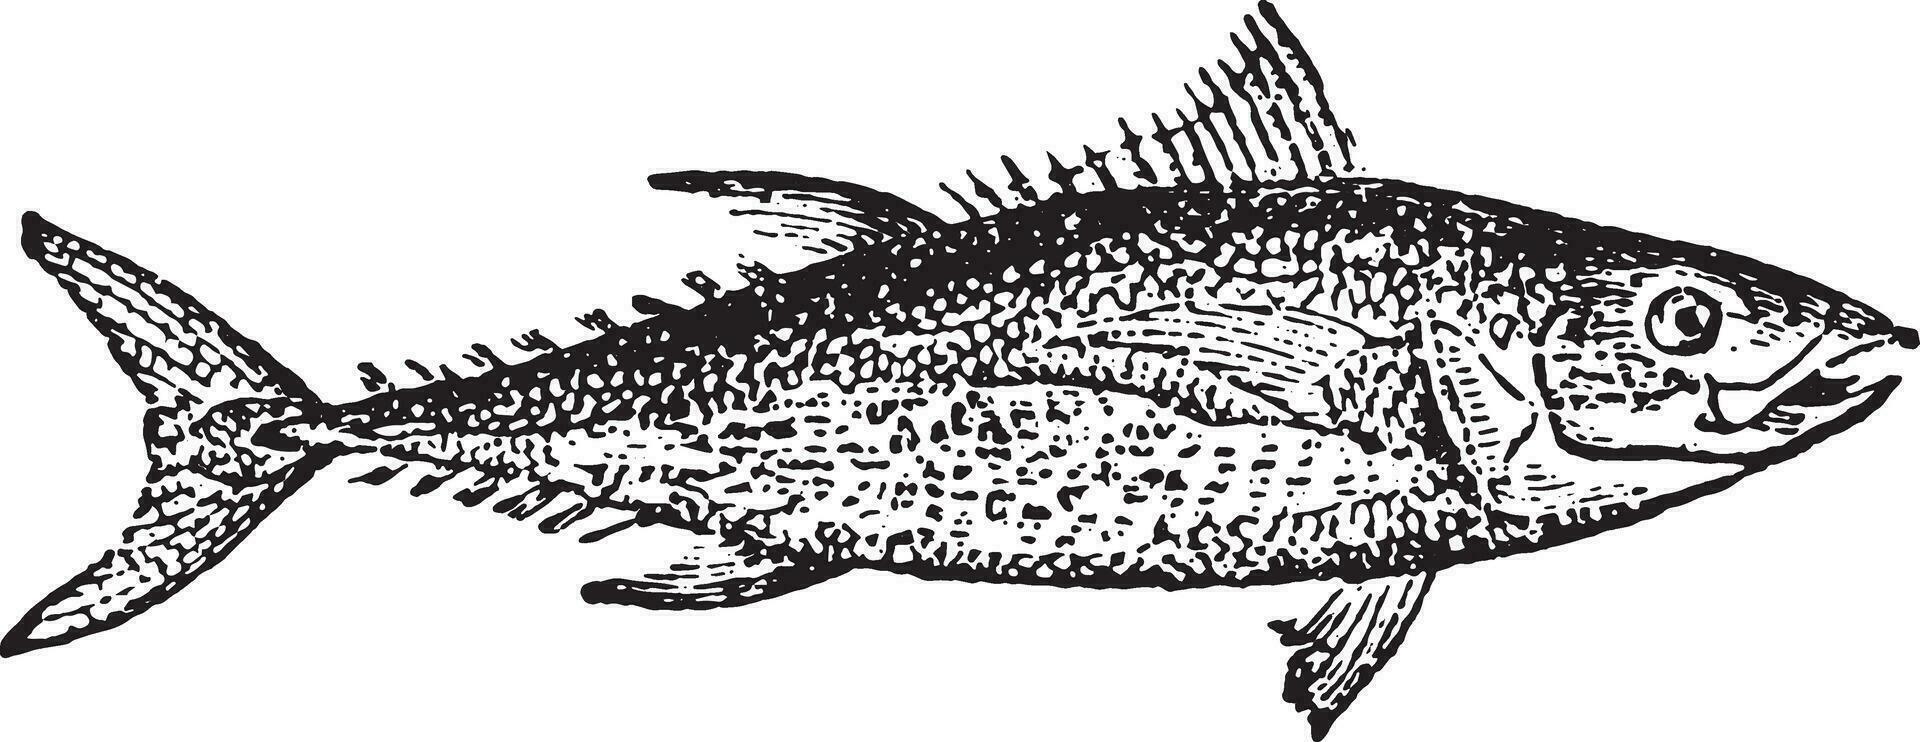 Thunfisch, Jahrgang Gravur. vektor